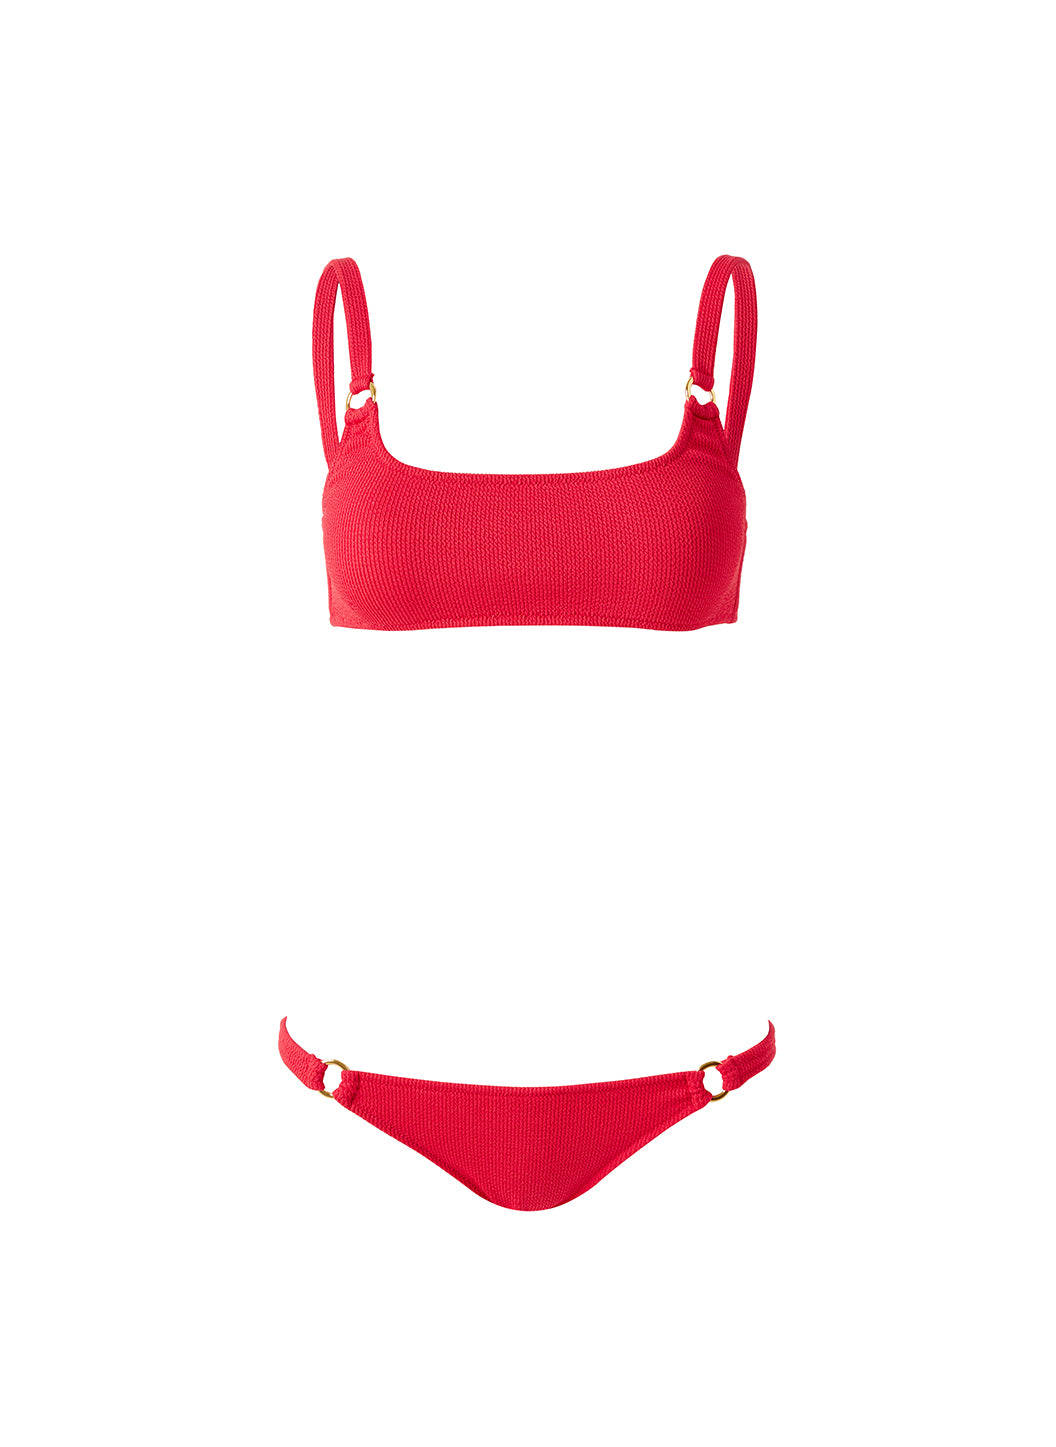 Bari Red Ridges Bikini Cutout